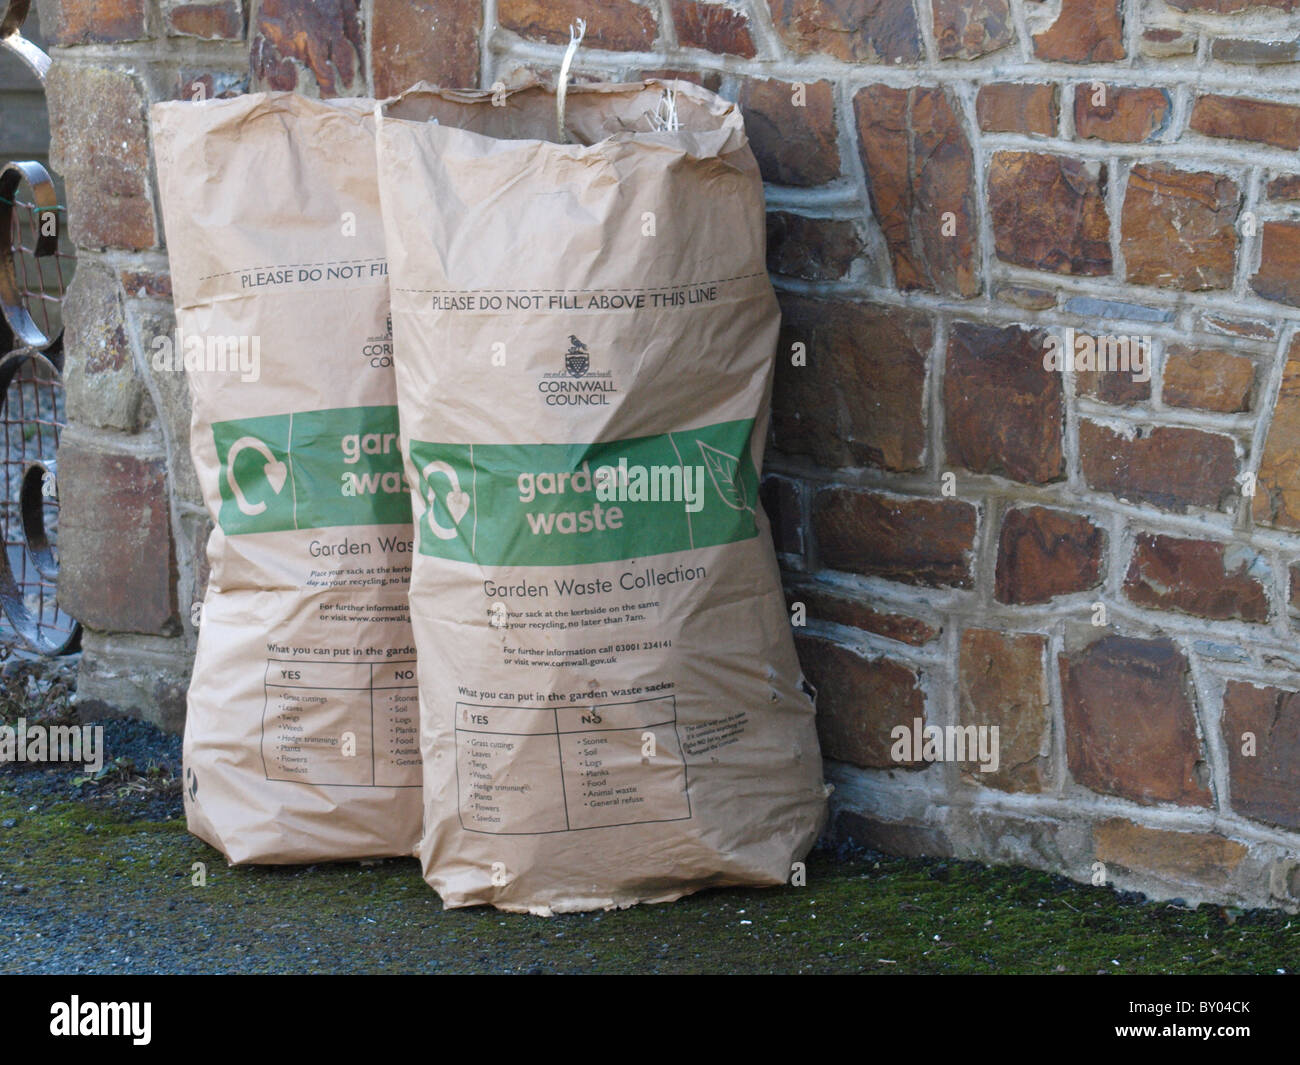 Rats von Cornwall Garten Abfall-recycling Sammlung Papiertüten, UK Stockfoto